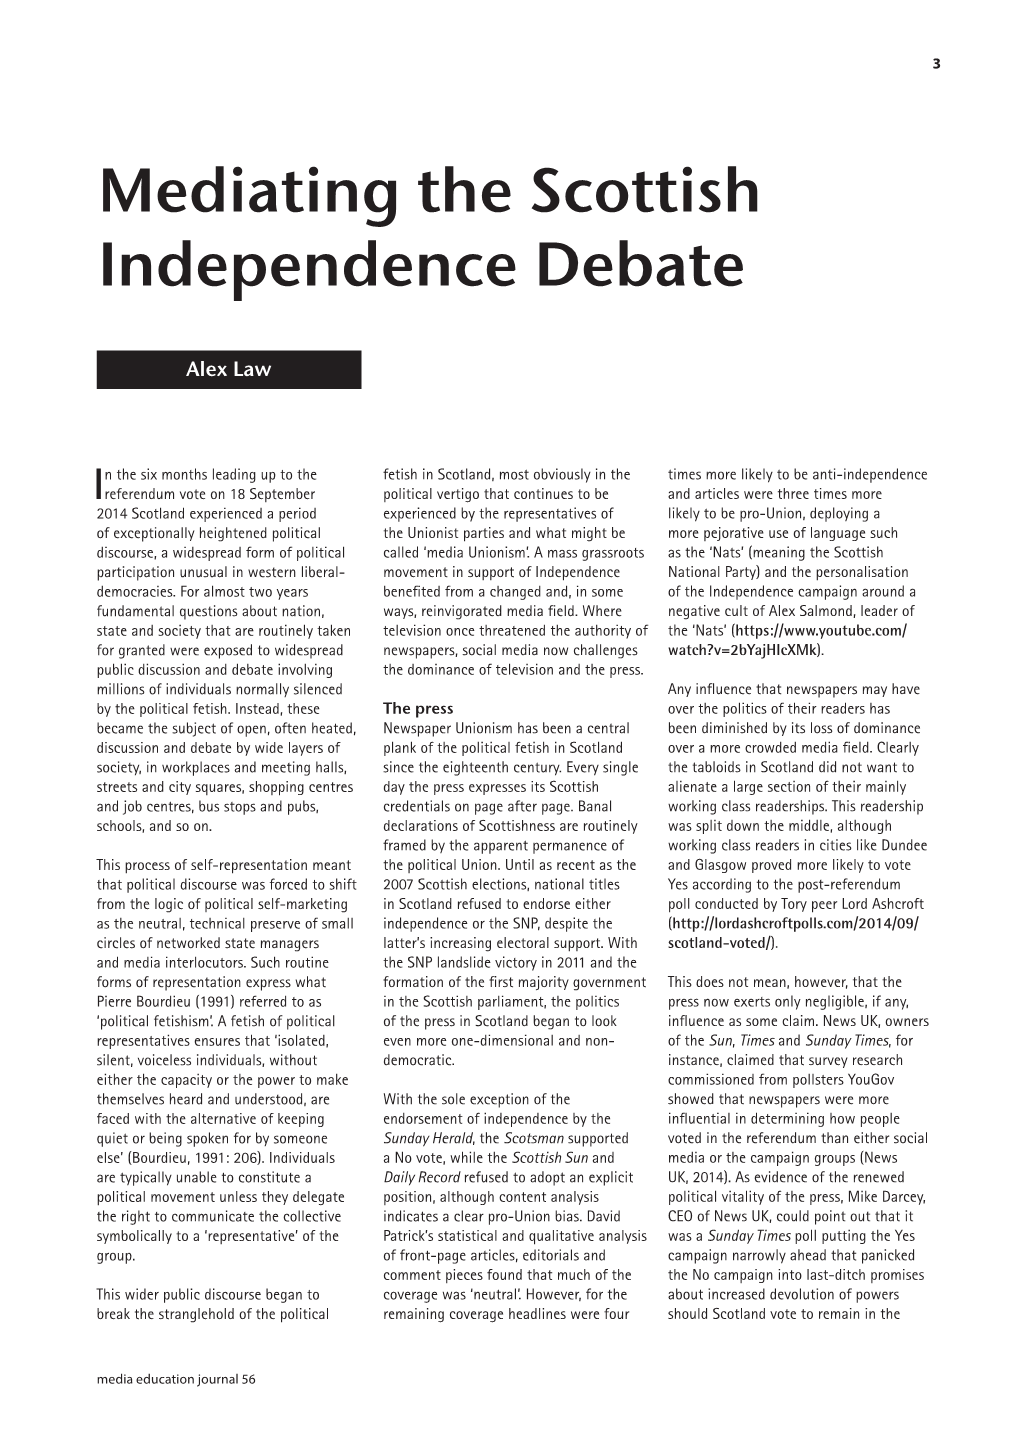 Mediating the Scottish Independence Debate